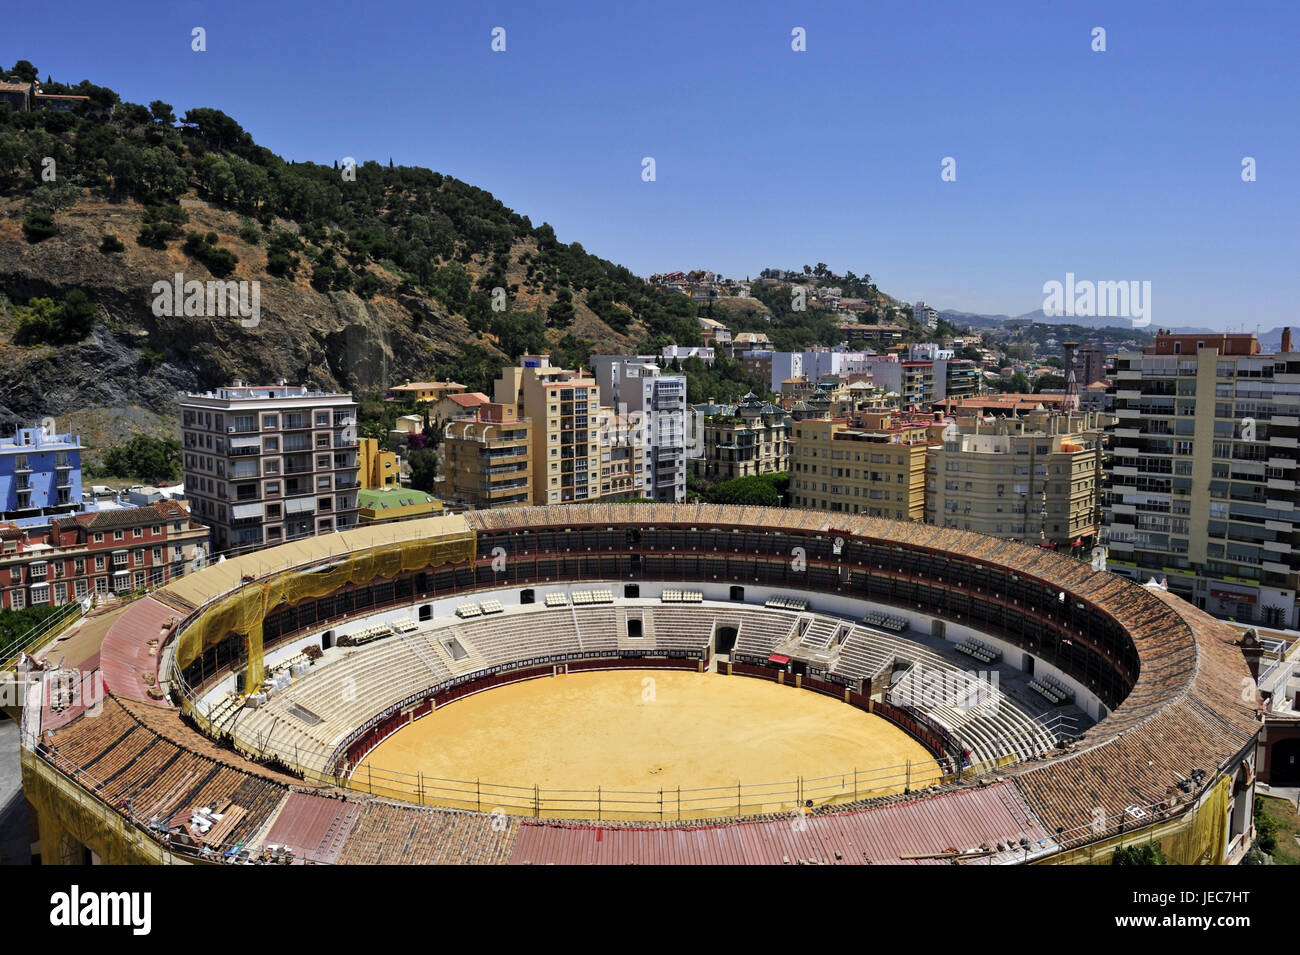 Spain, Malaga, view at the bullfight arena, Stock Photo